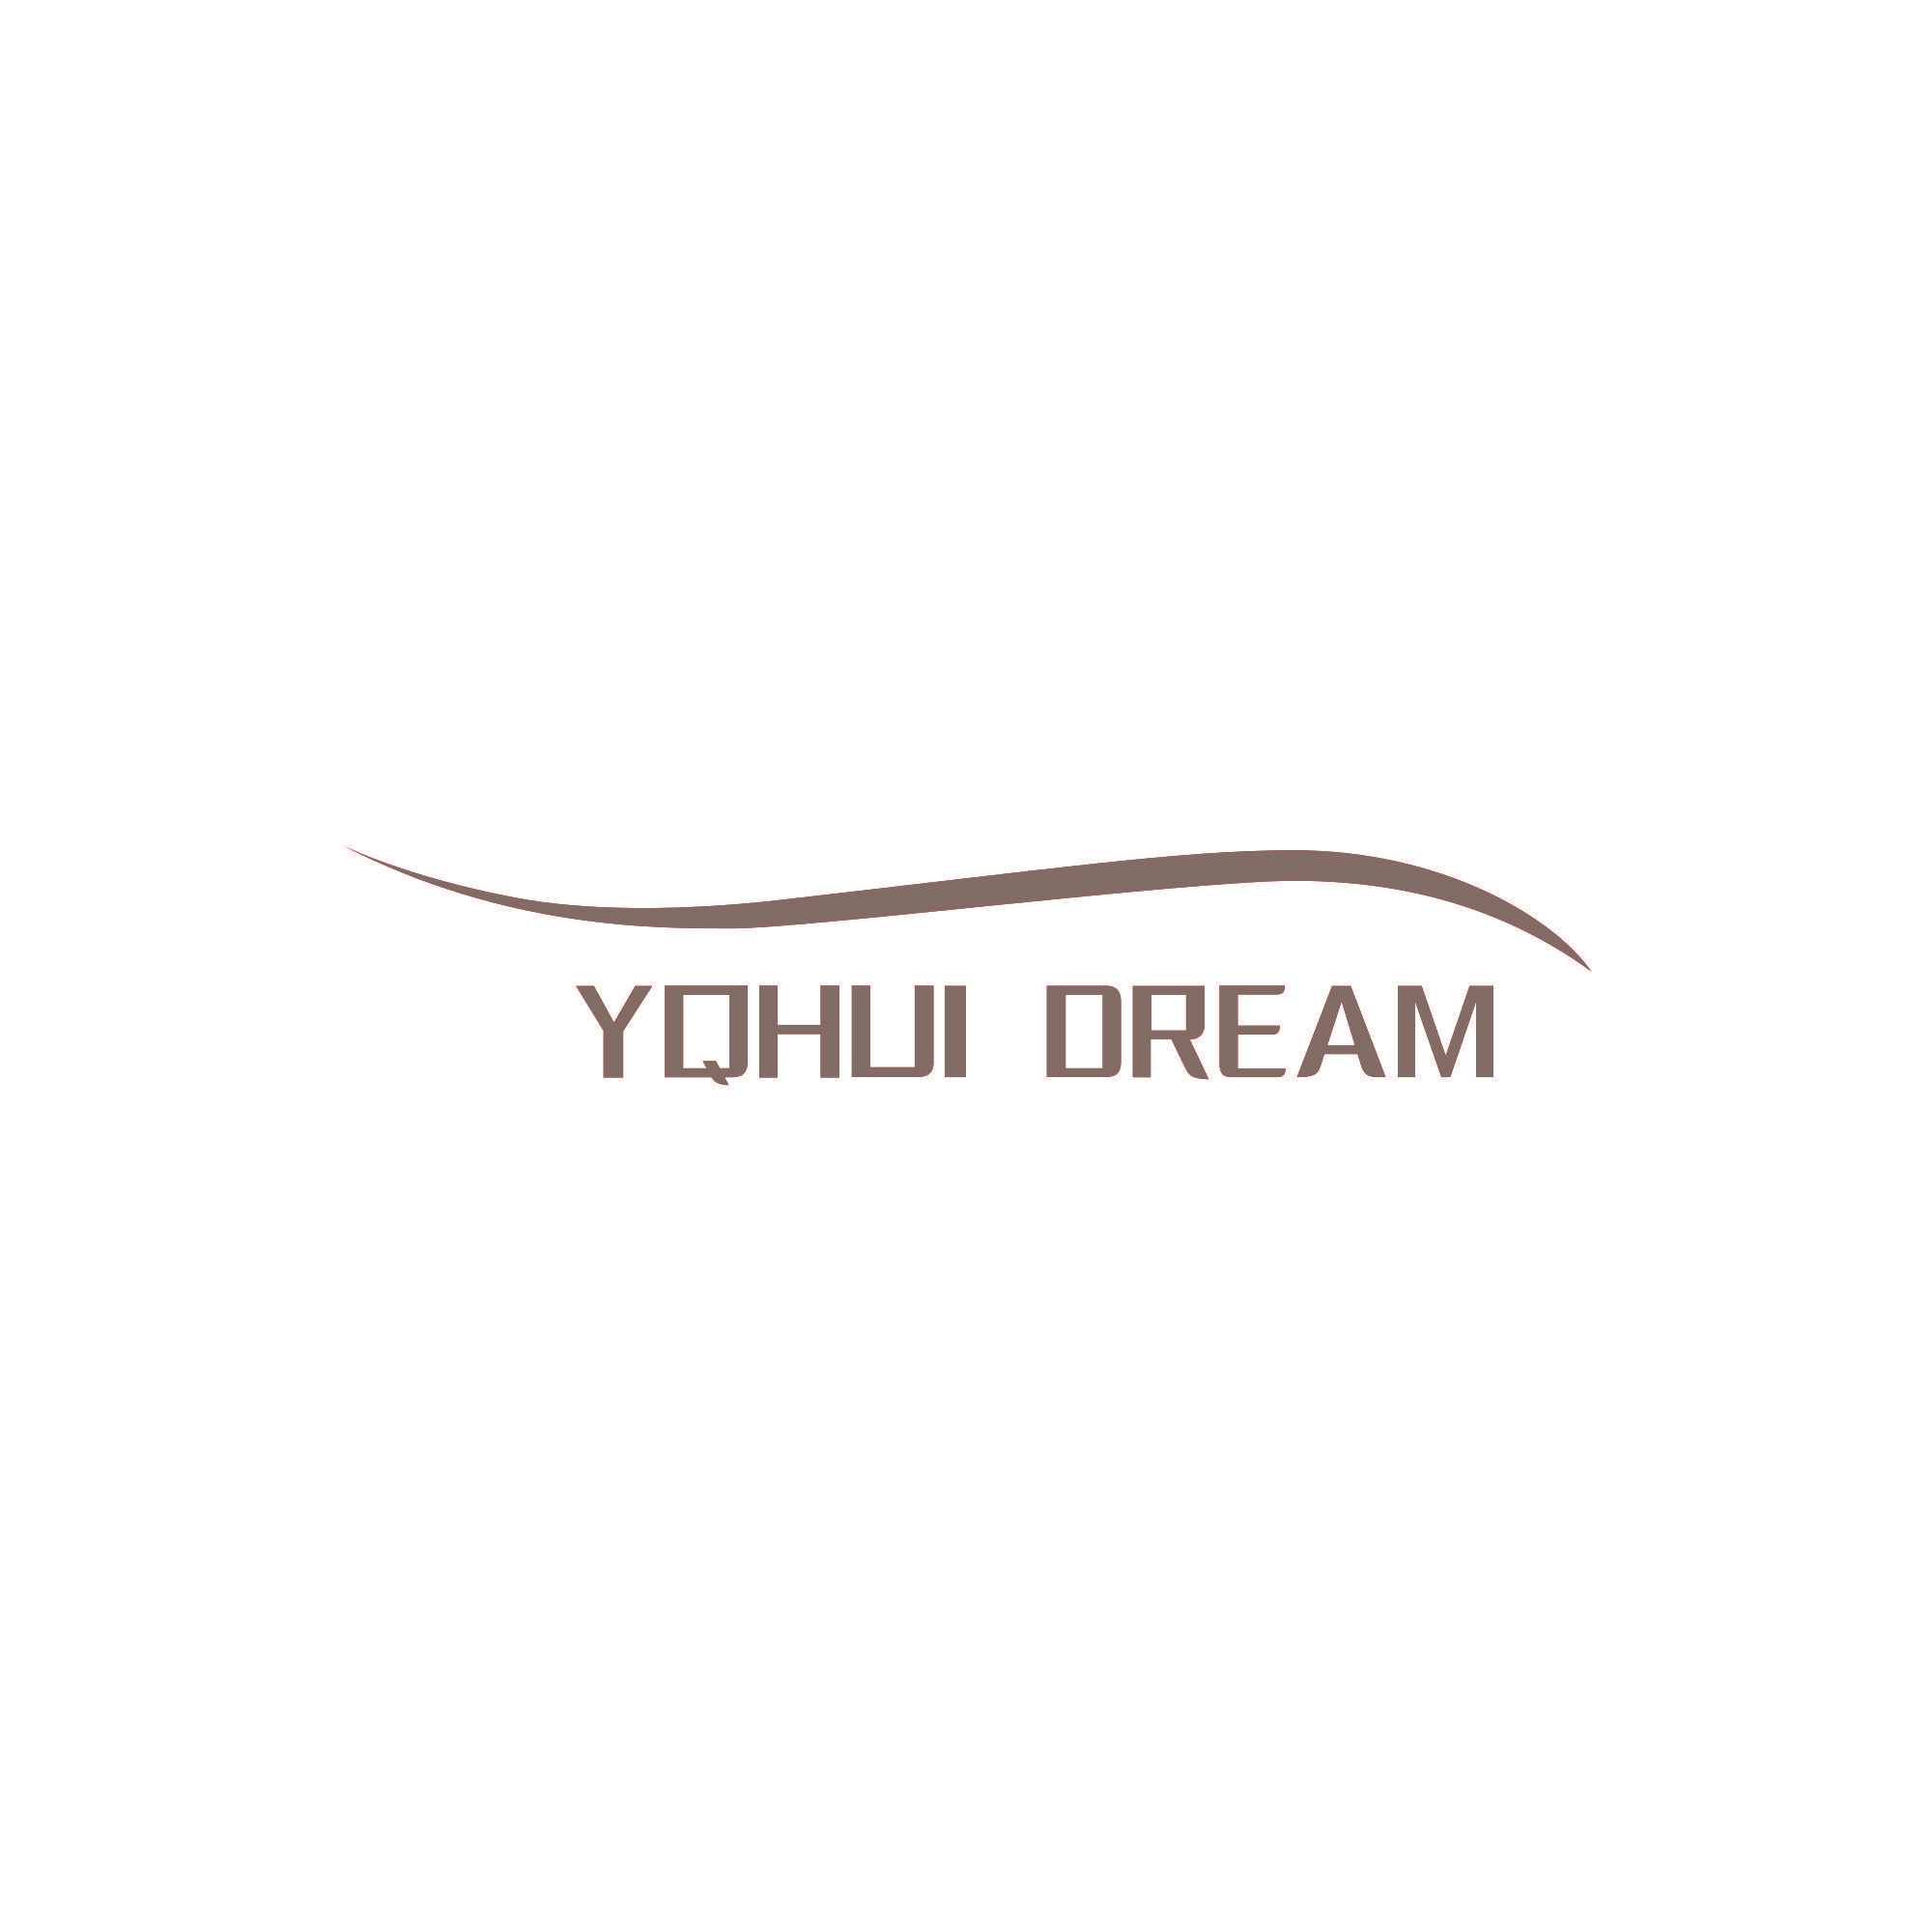 YQHUI DREAM